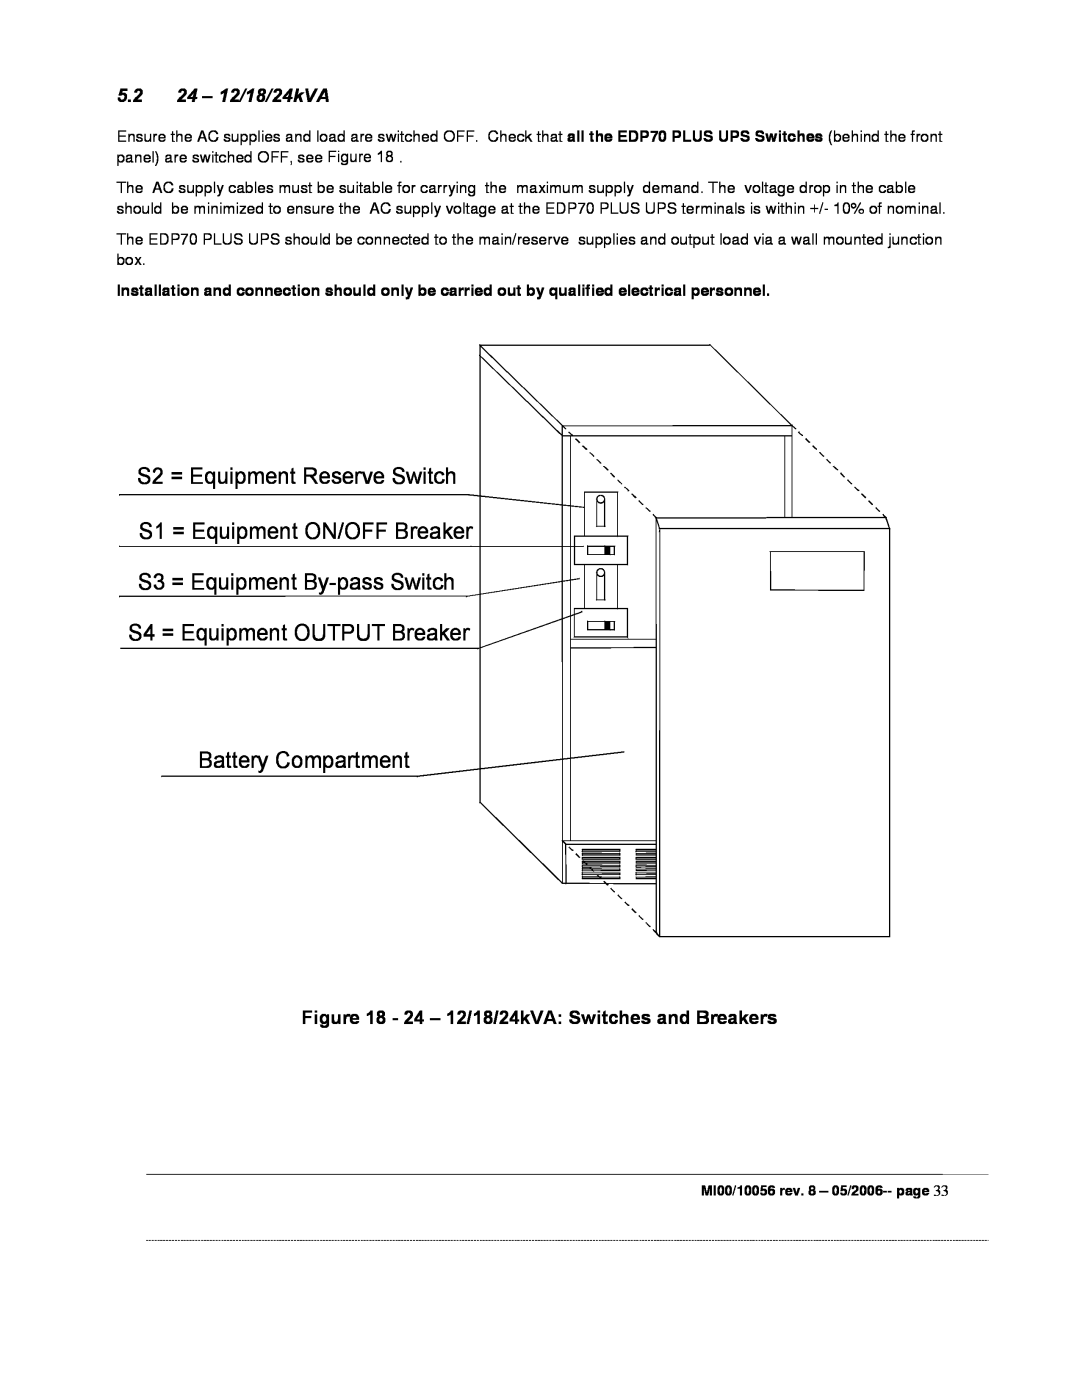 Garmin EDP70 manual S2 = Equipment Reserve Switch, S1 = Equipment ON/OFF Breaker, S3 = Equipment By-pass Switch 